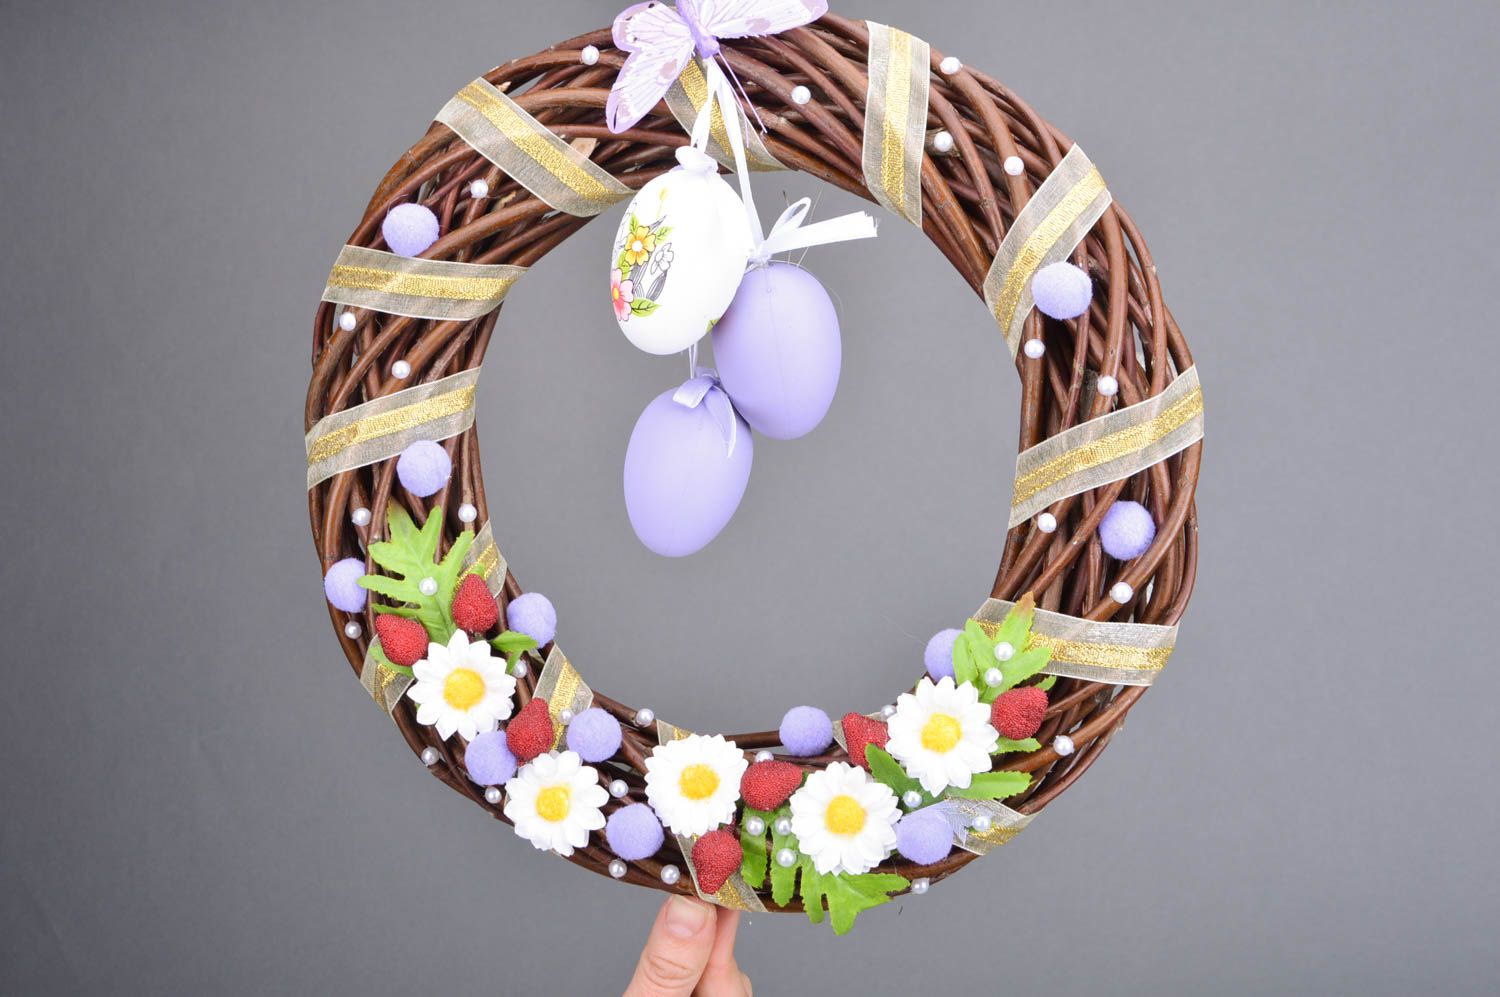 Handmade beautiful wicker handmade door wreath with eggs Easter decoration ideas photo 3